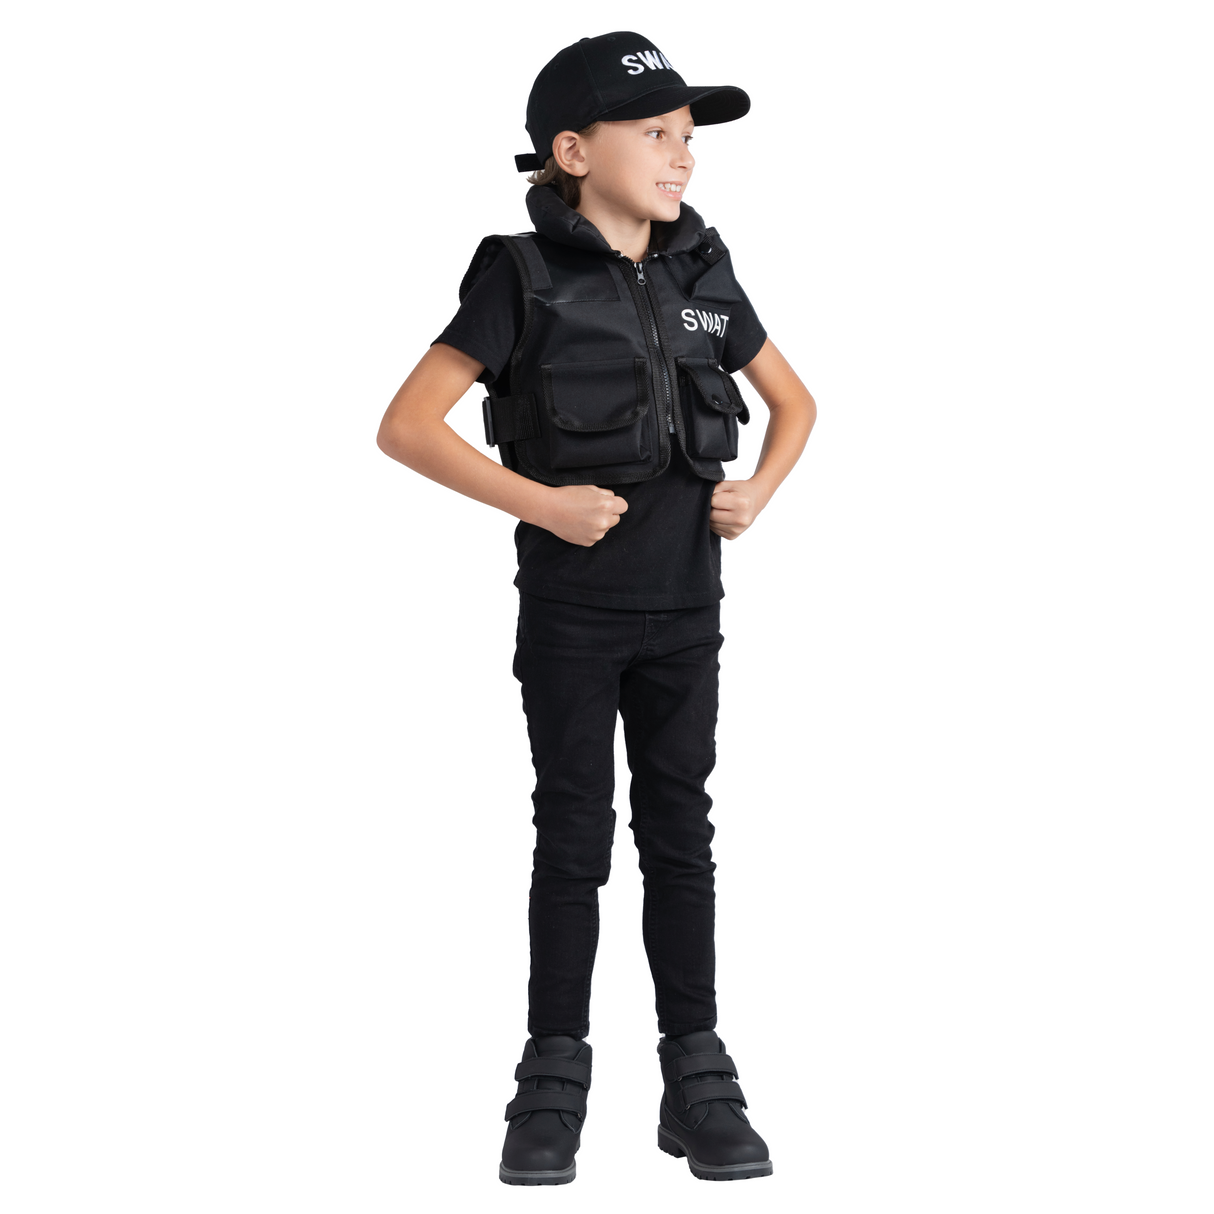 SWAT Vest and Cap Set - Kids